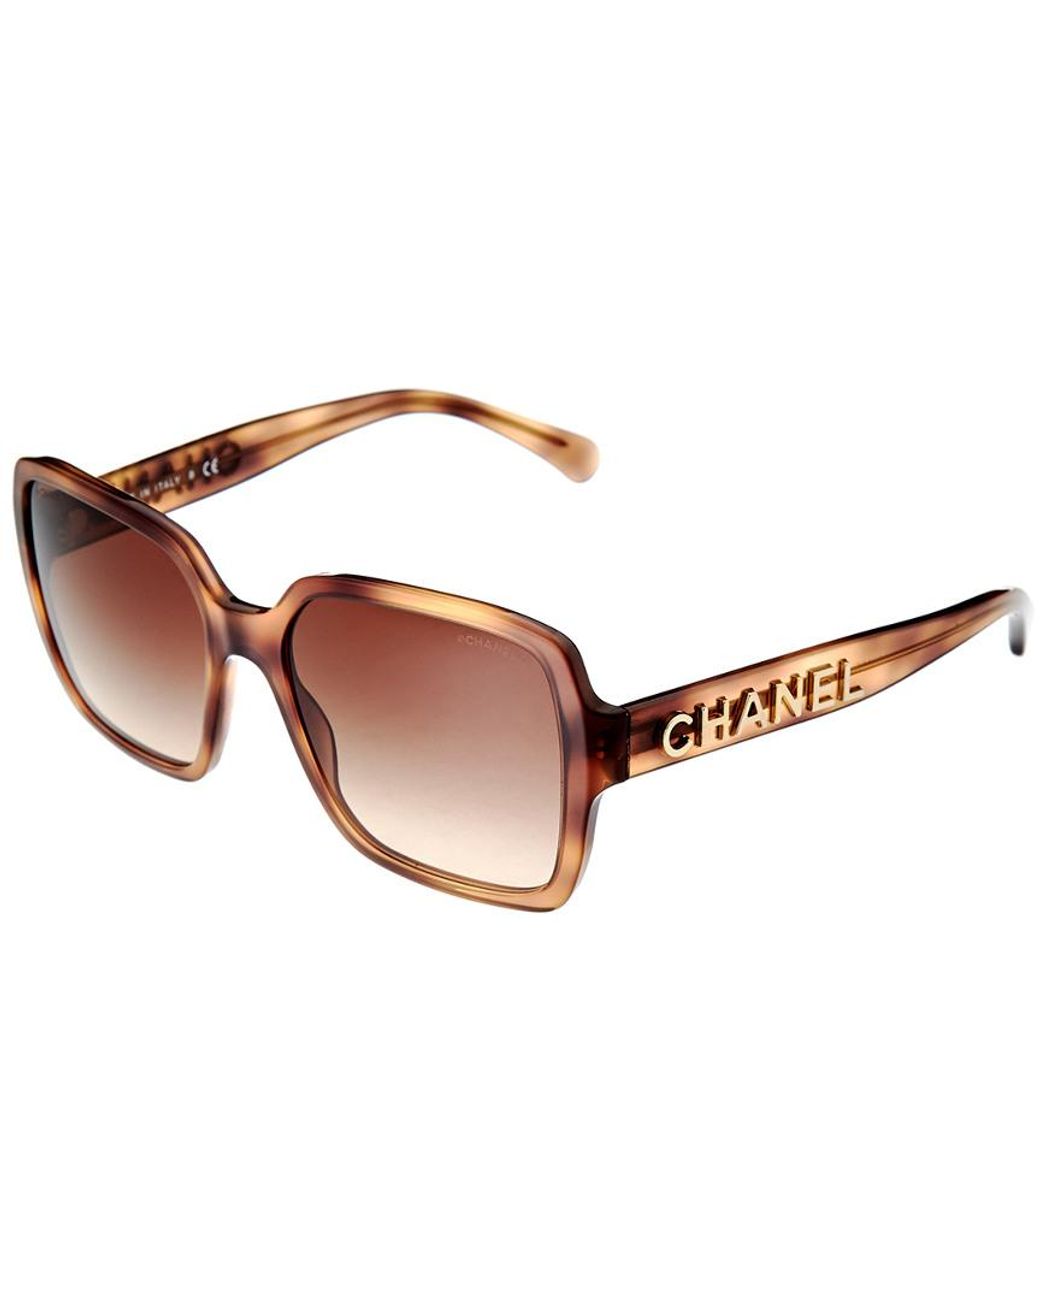 Chanel Ch5408 1660/s5 56mm Sunglasses